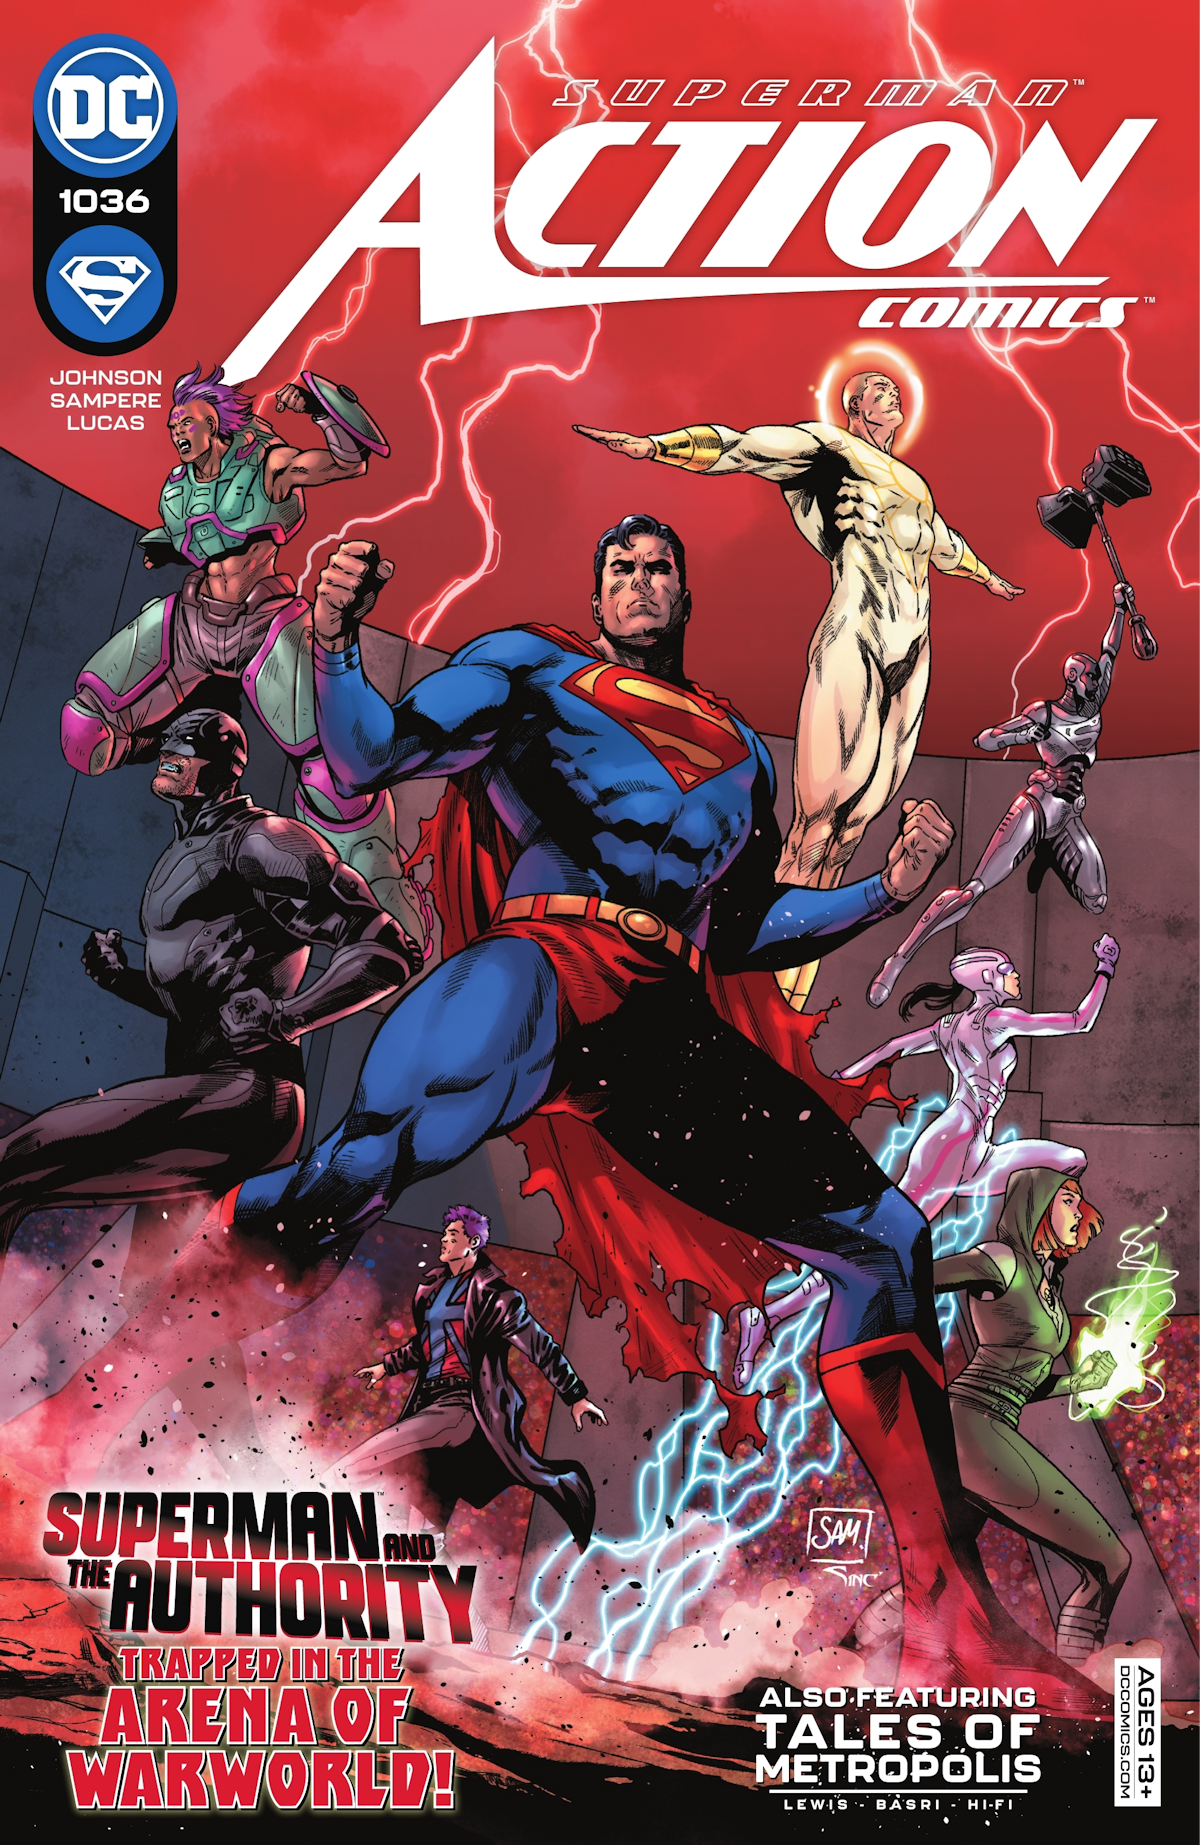 Action Comics 1036 (Cover A)